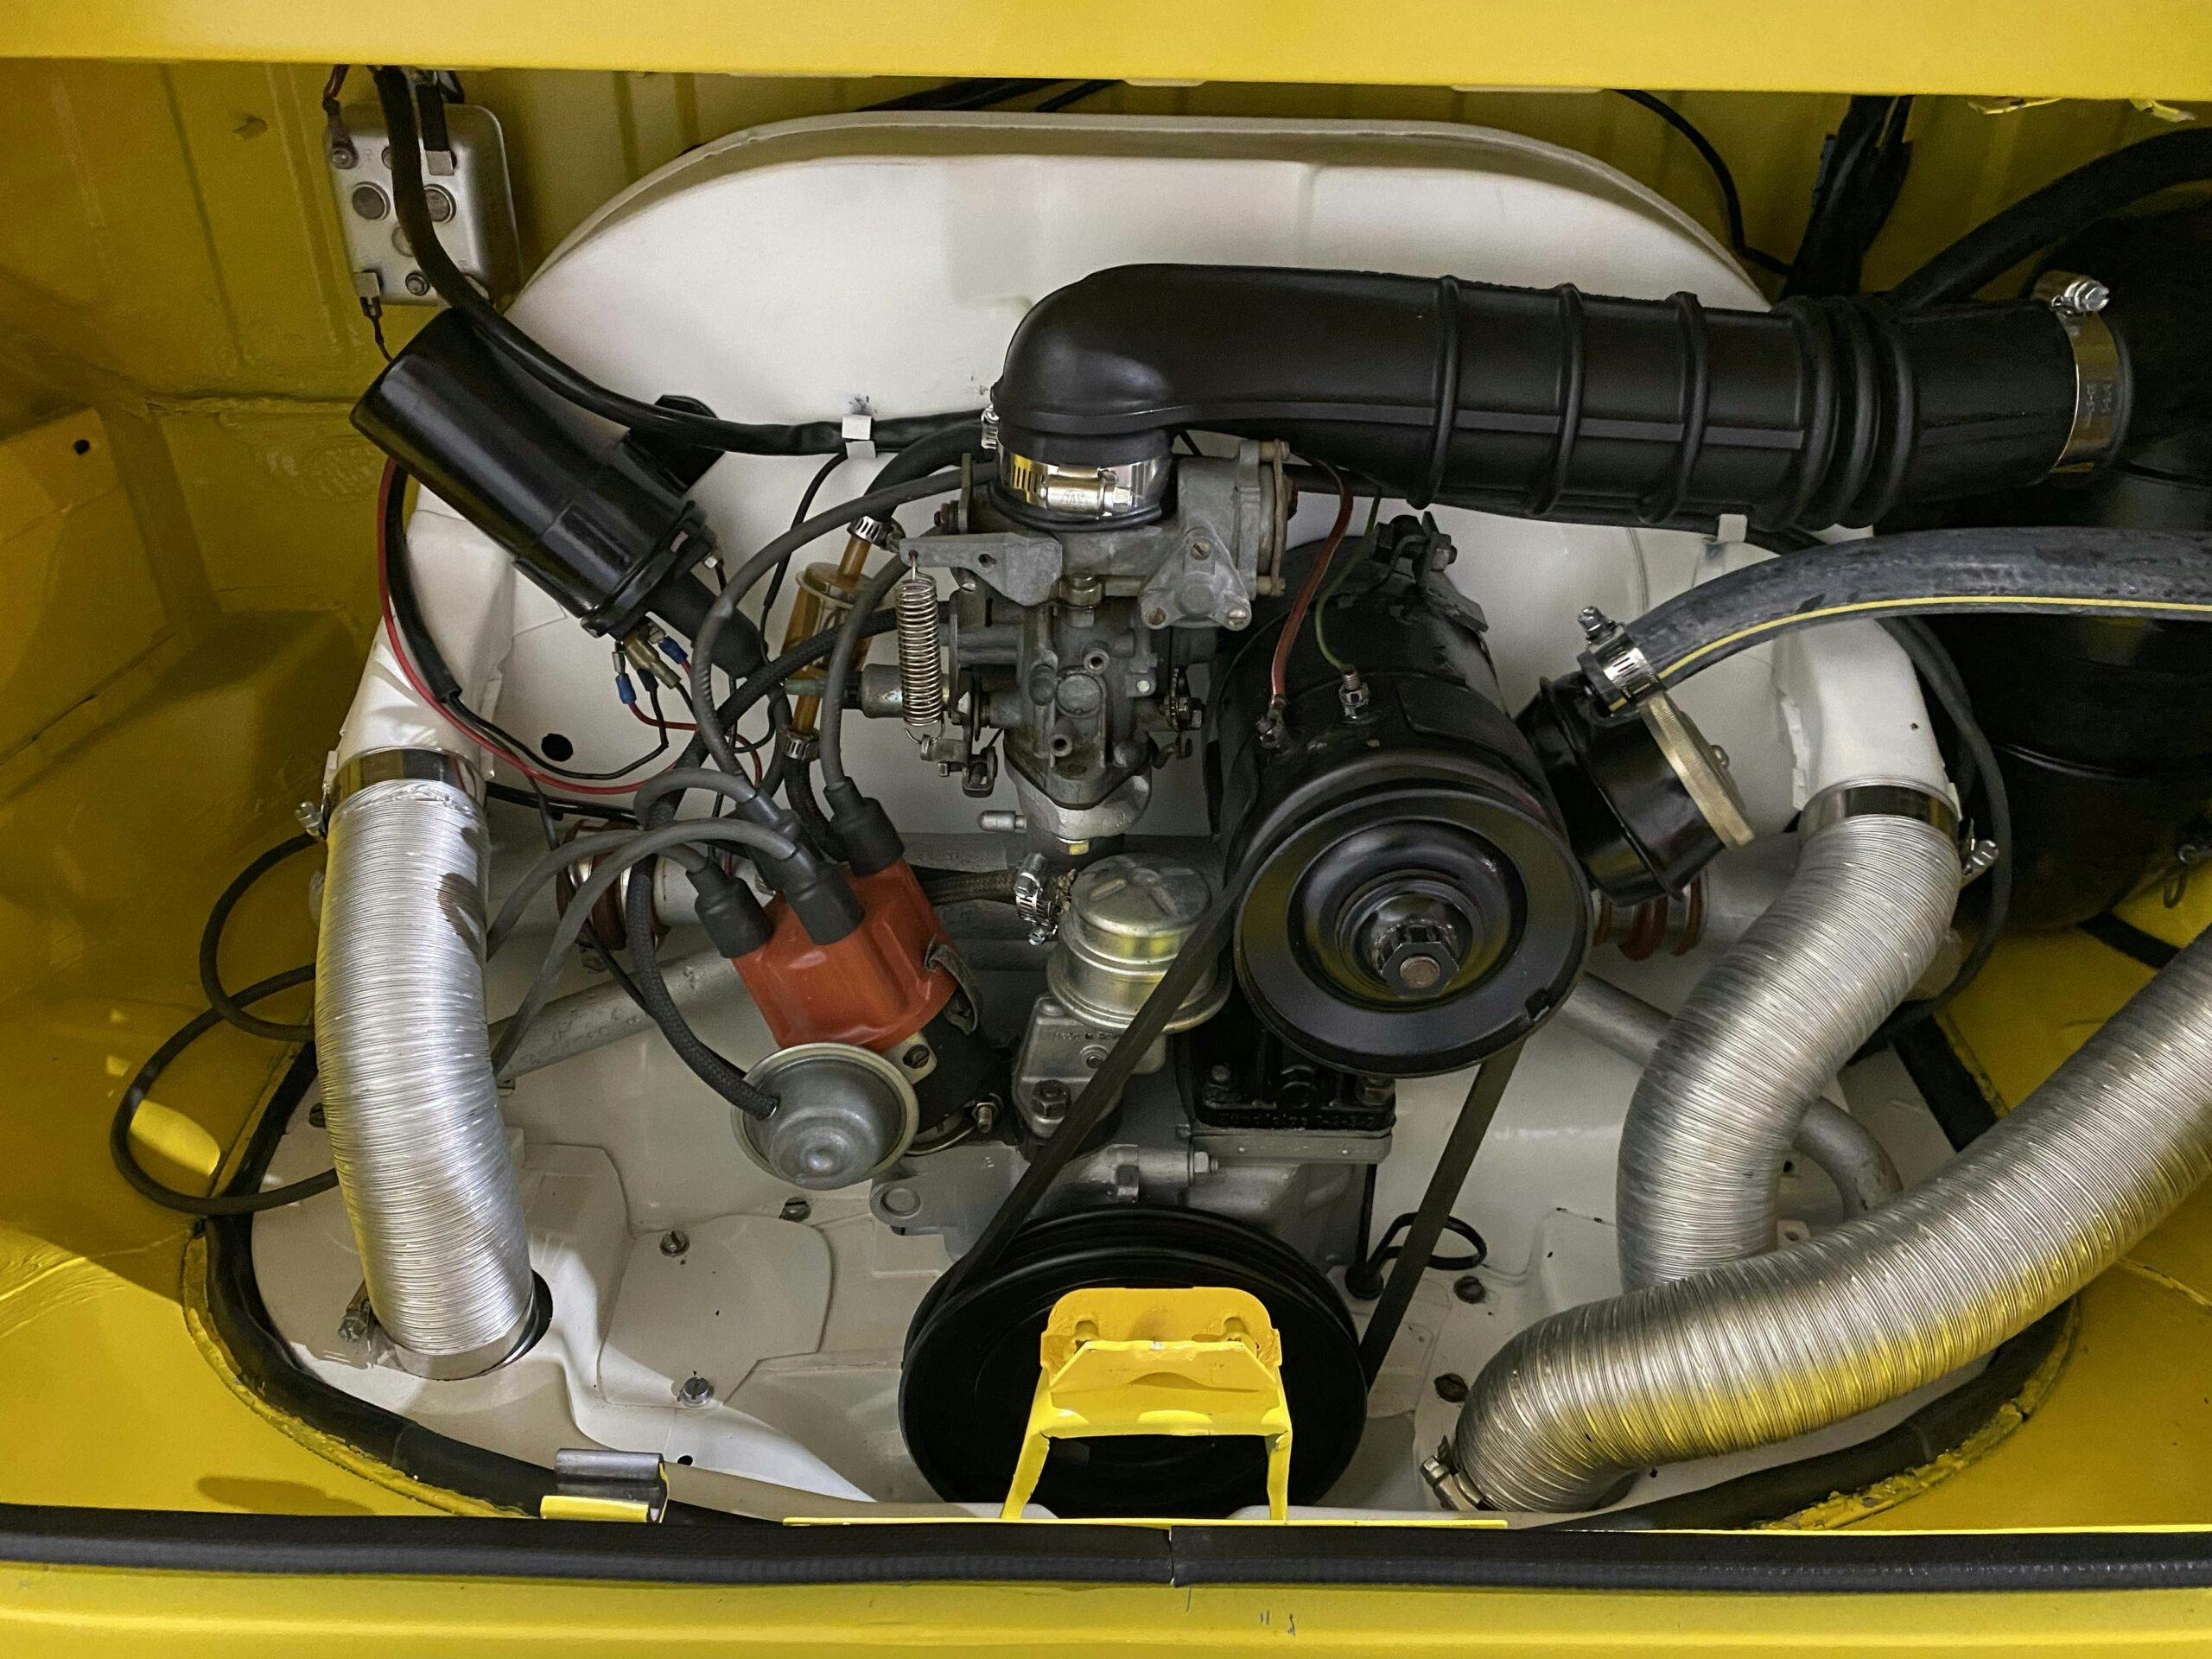 1974 Volkswagen Type 181 Thing engine